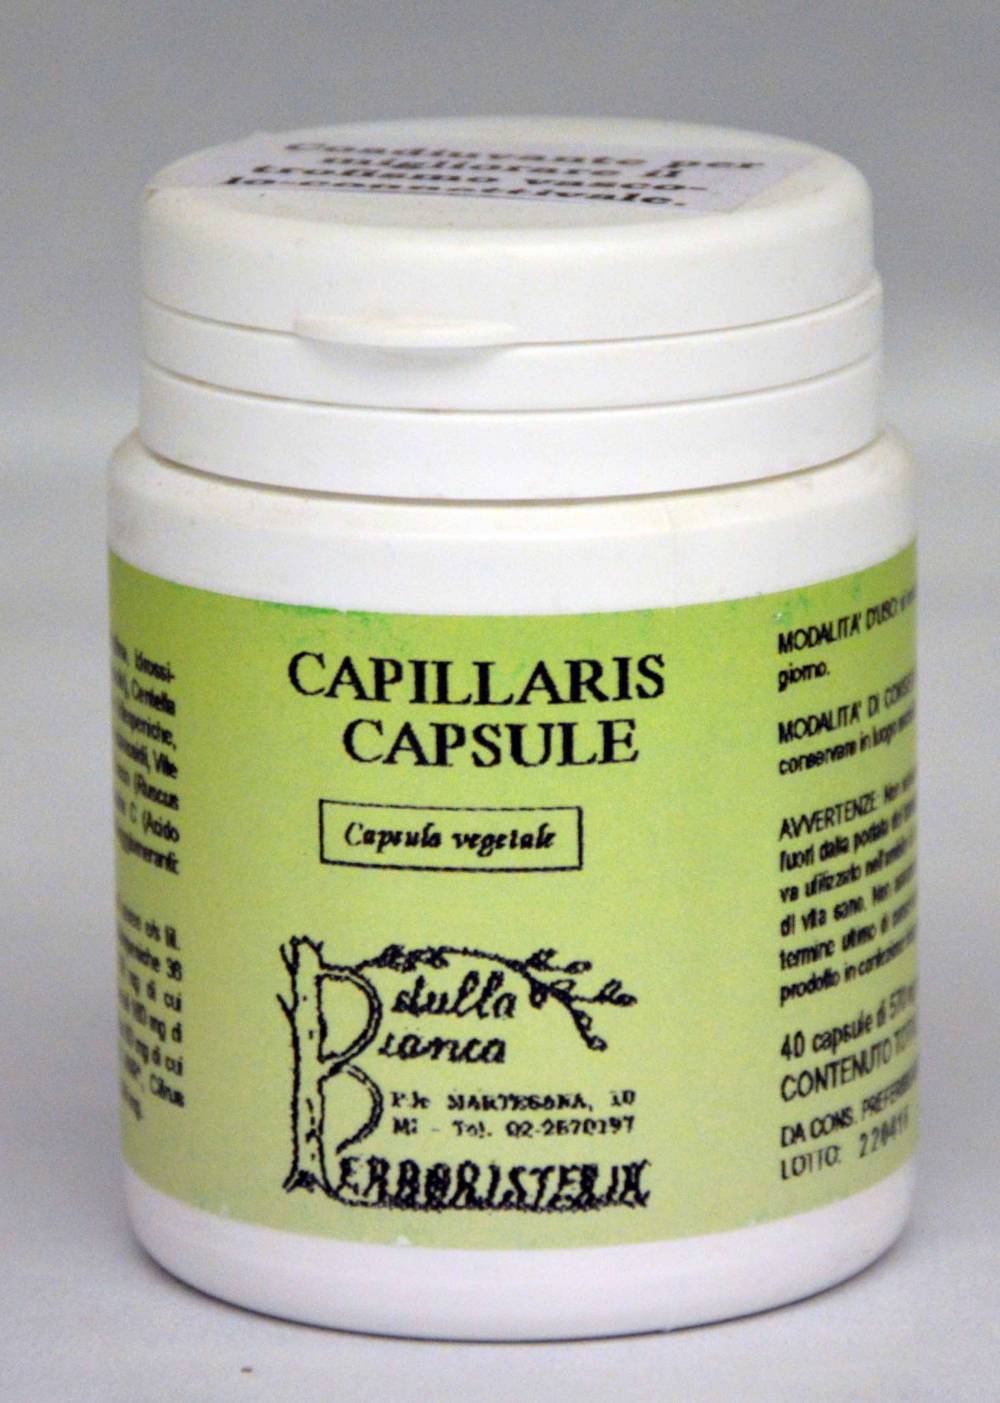 Capillaris